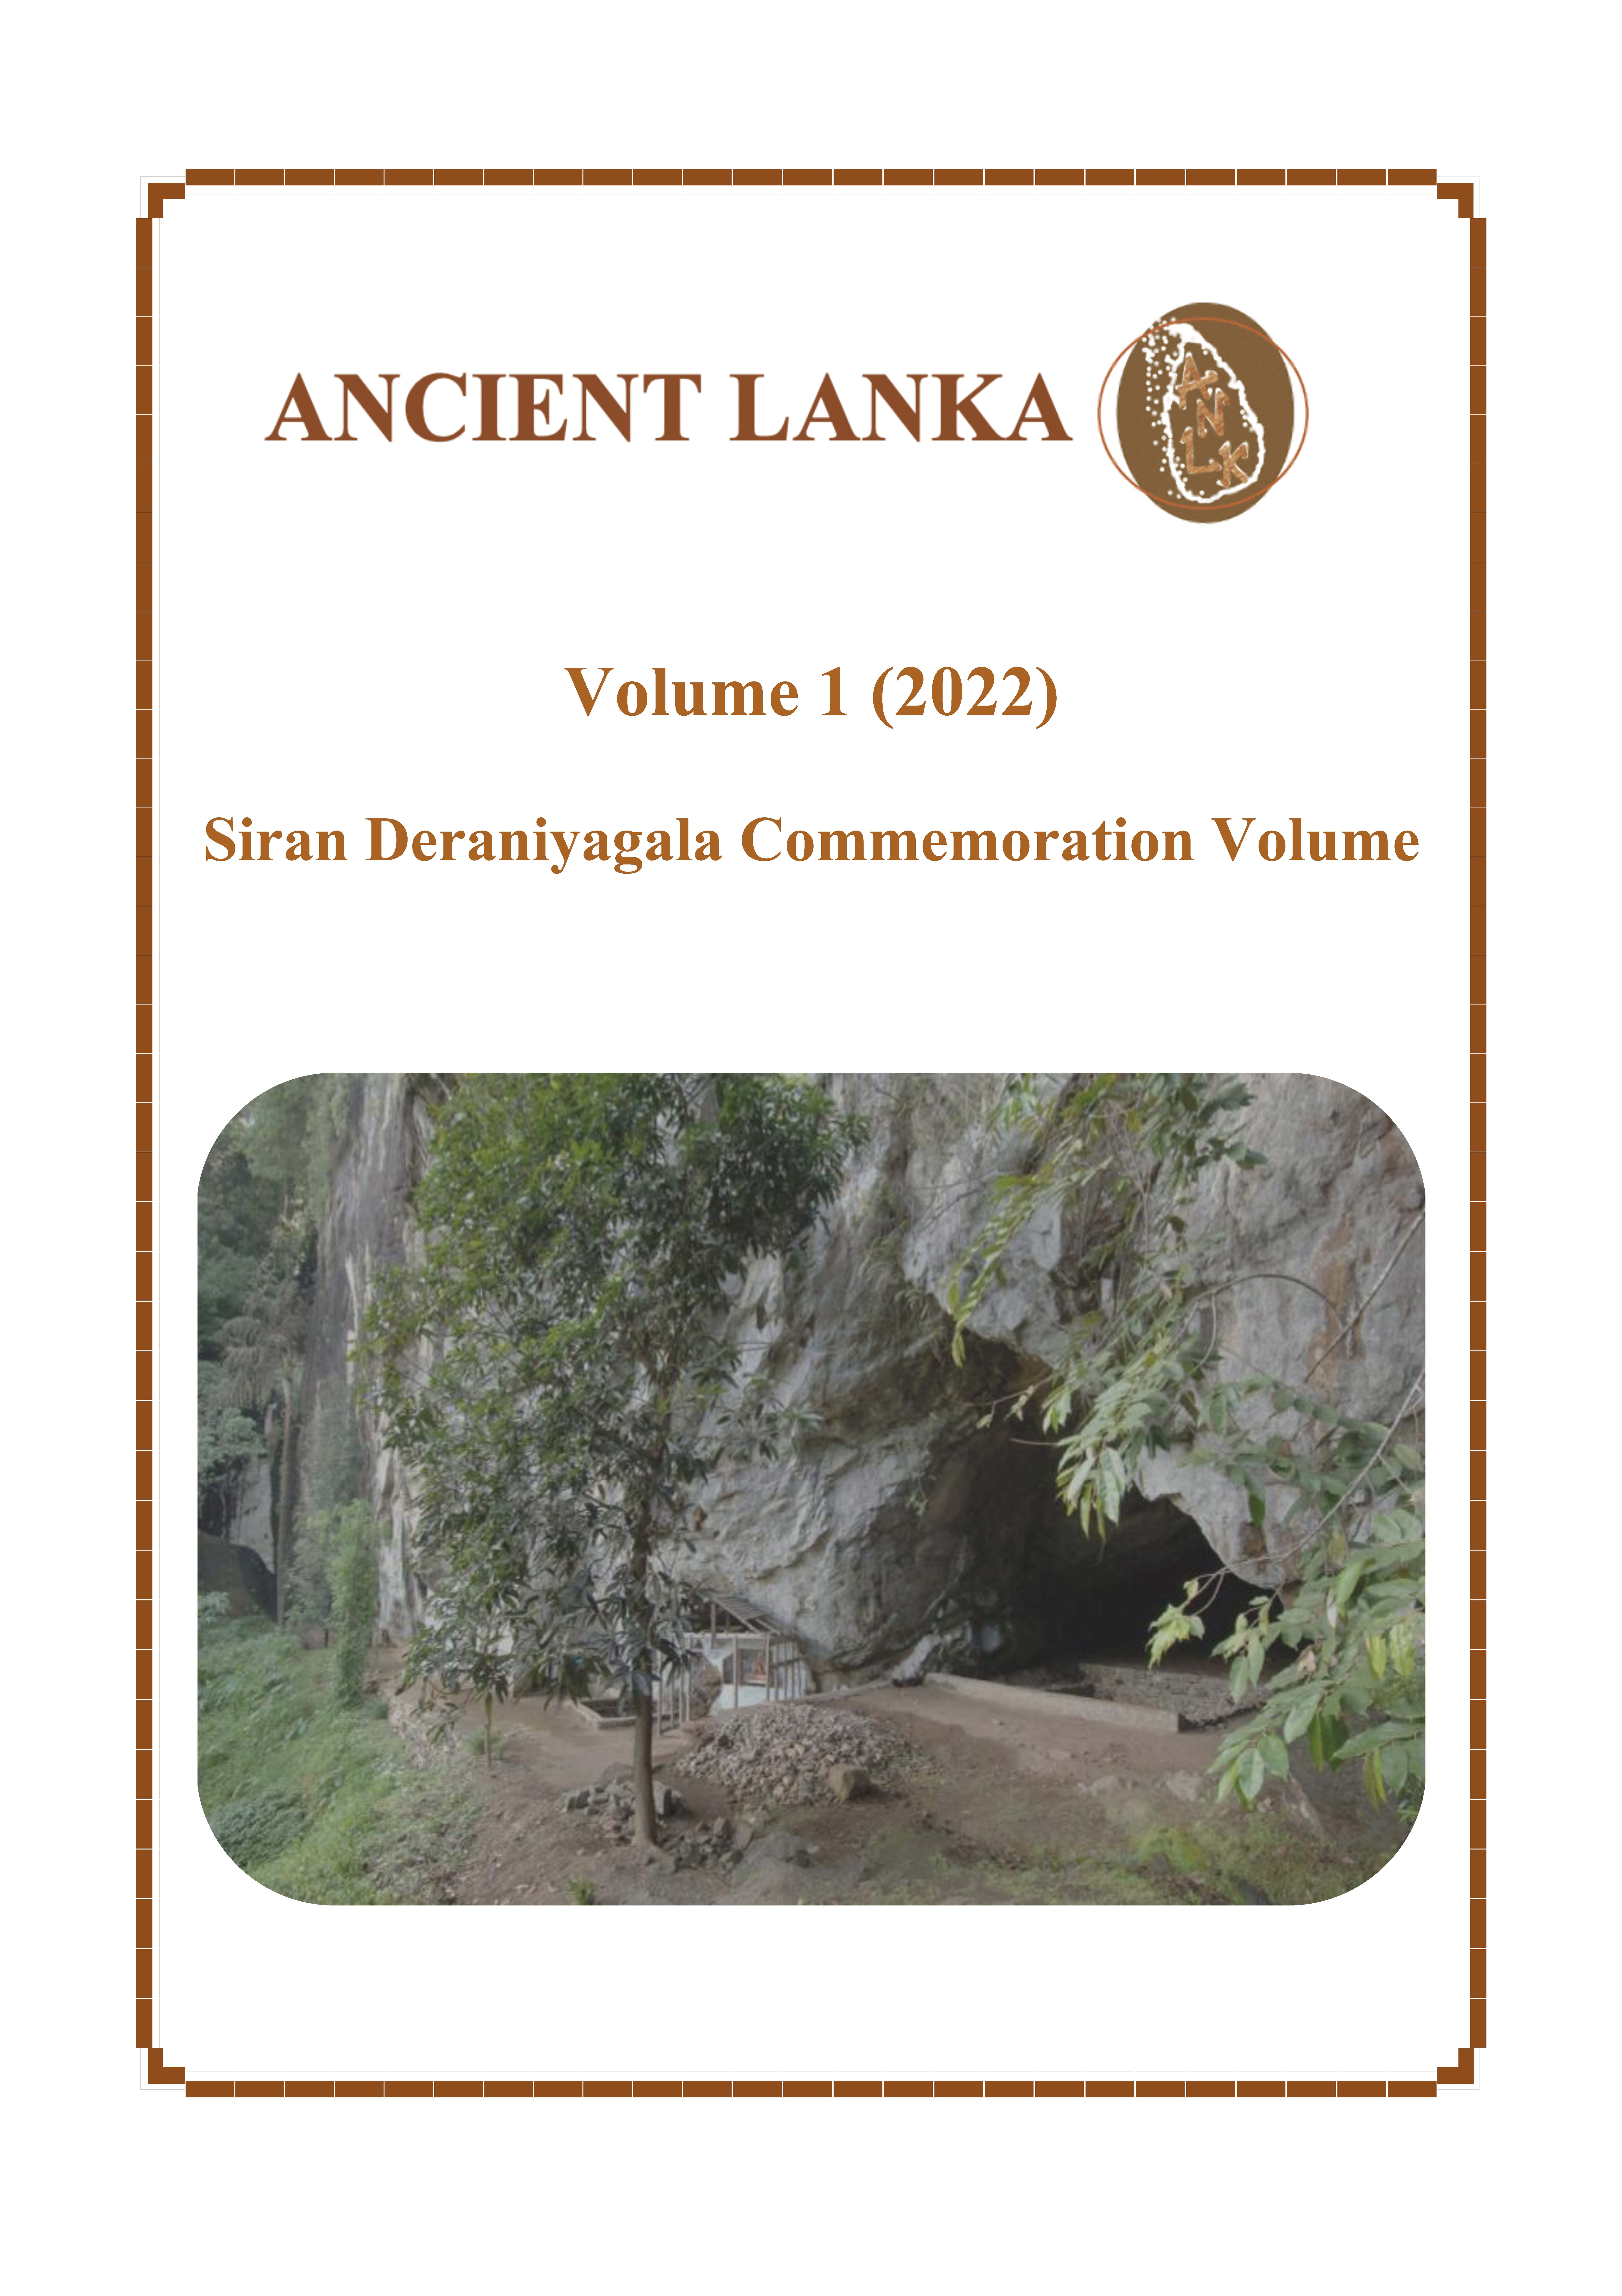 Ancient Lanka Volume 1. Batadomba-Lena, Kuruwita, Sri Lanka